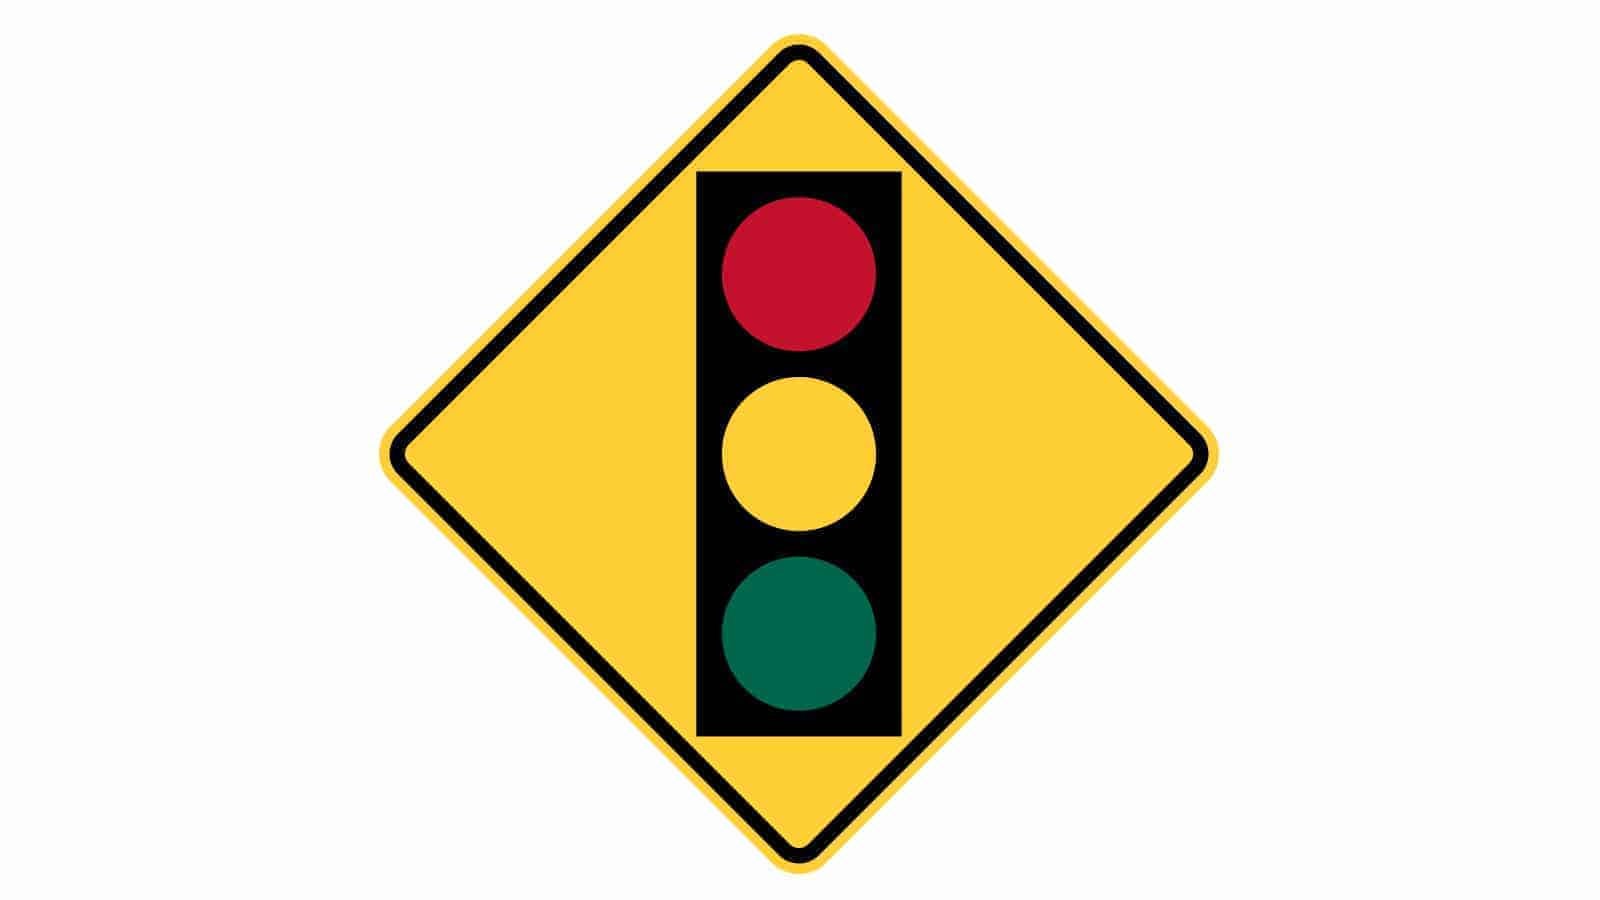 Warning sign traffic lights ahead